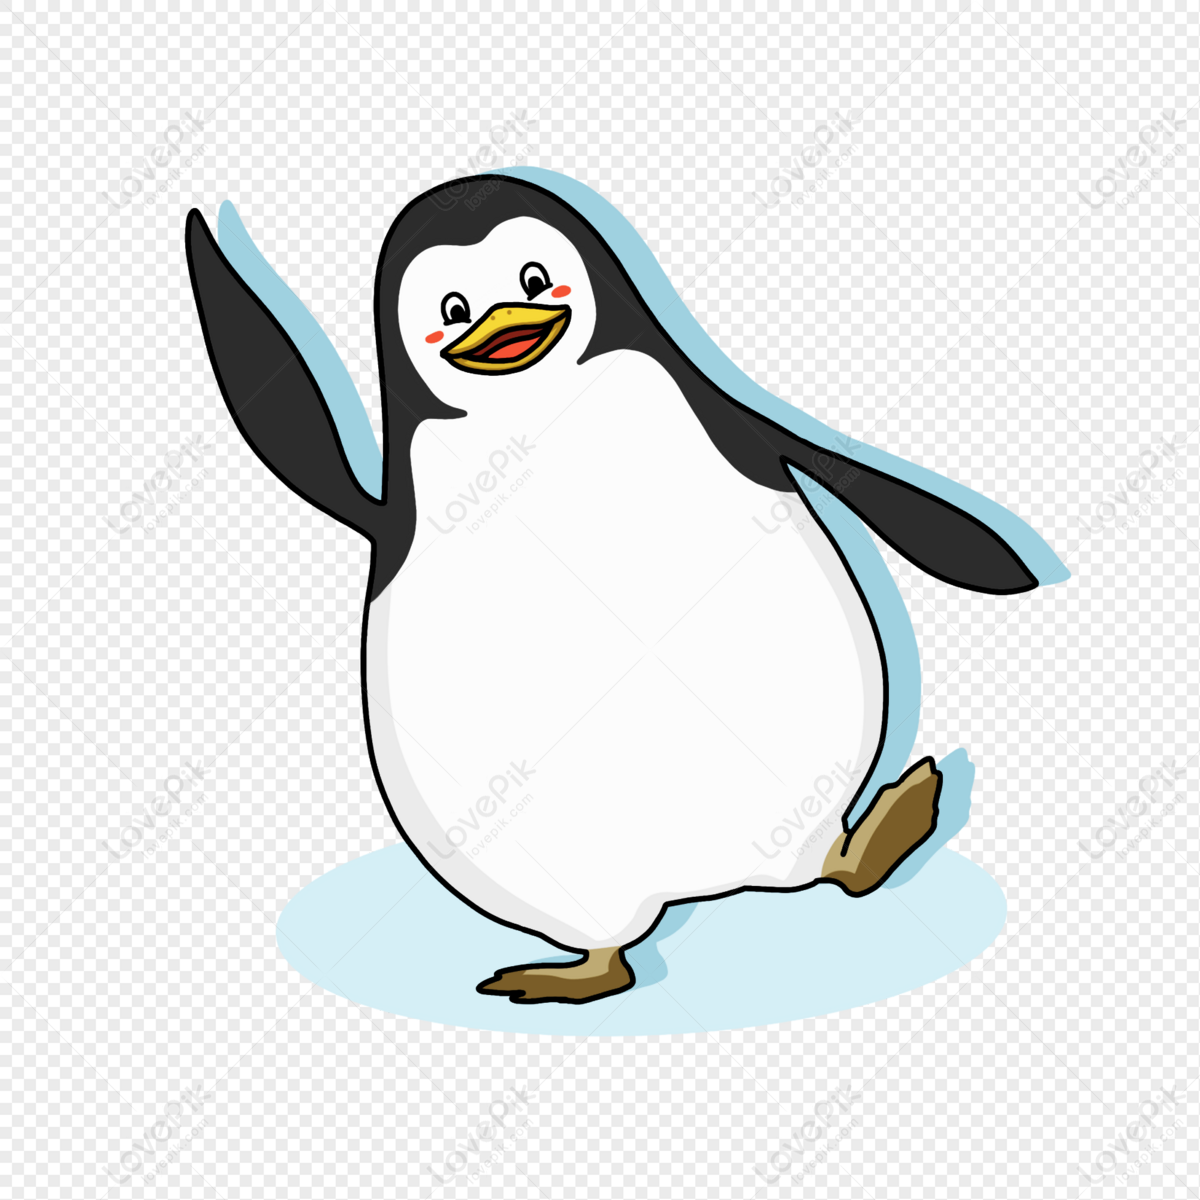 Cartoon Penguin Dance Illustration PNG Transparent And Clipart Image